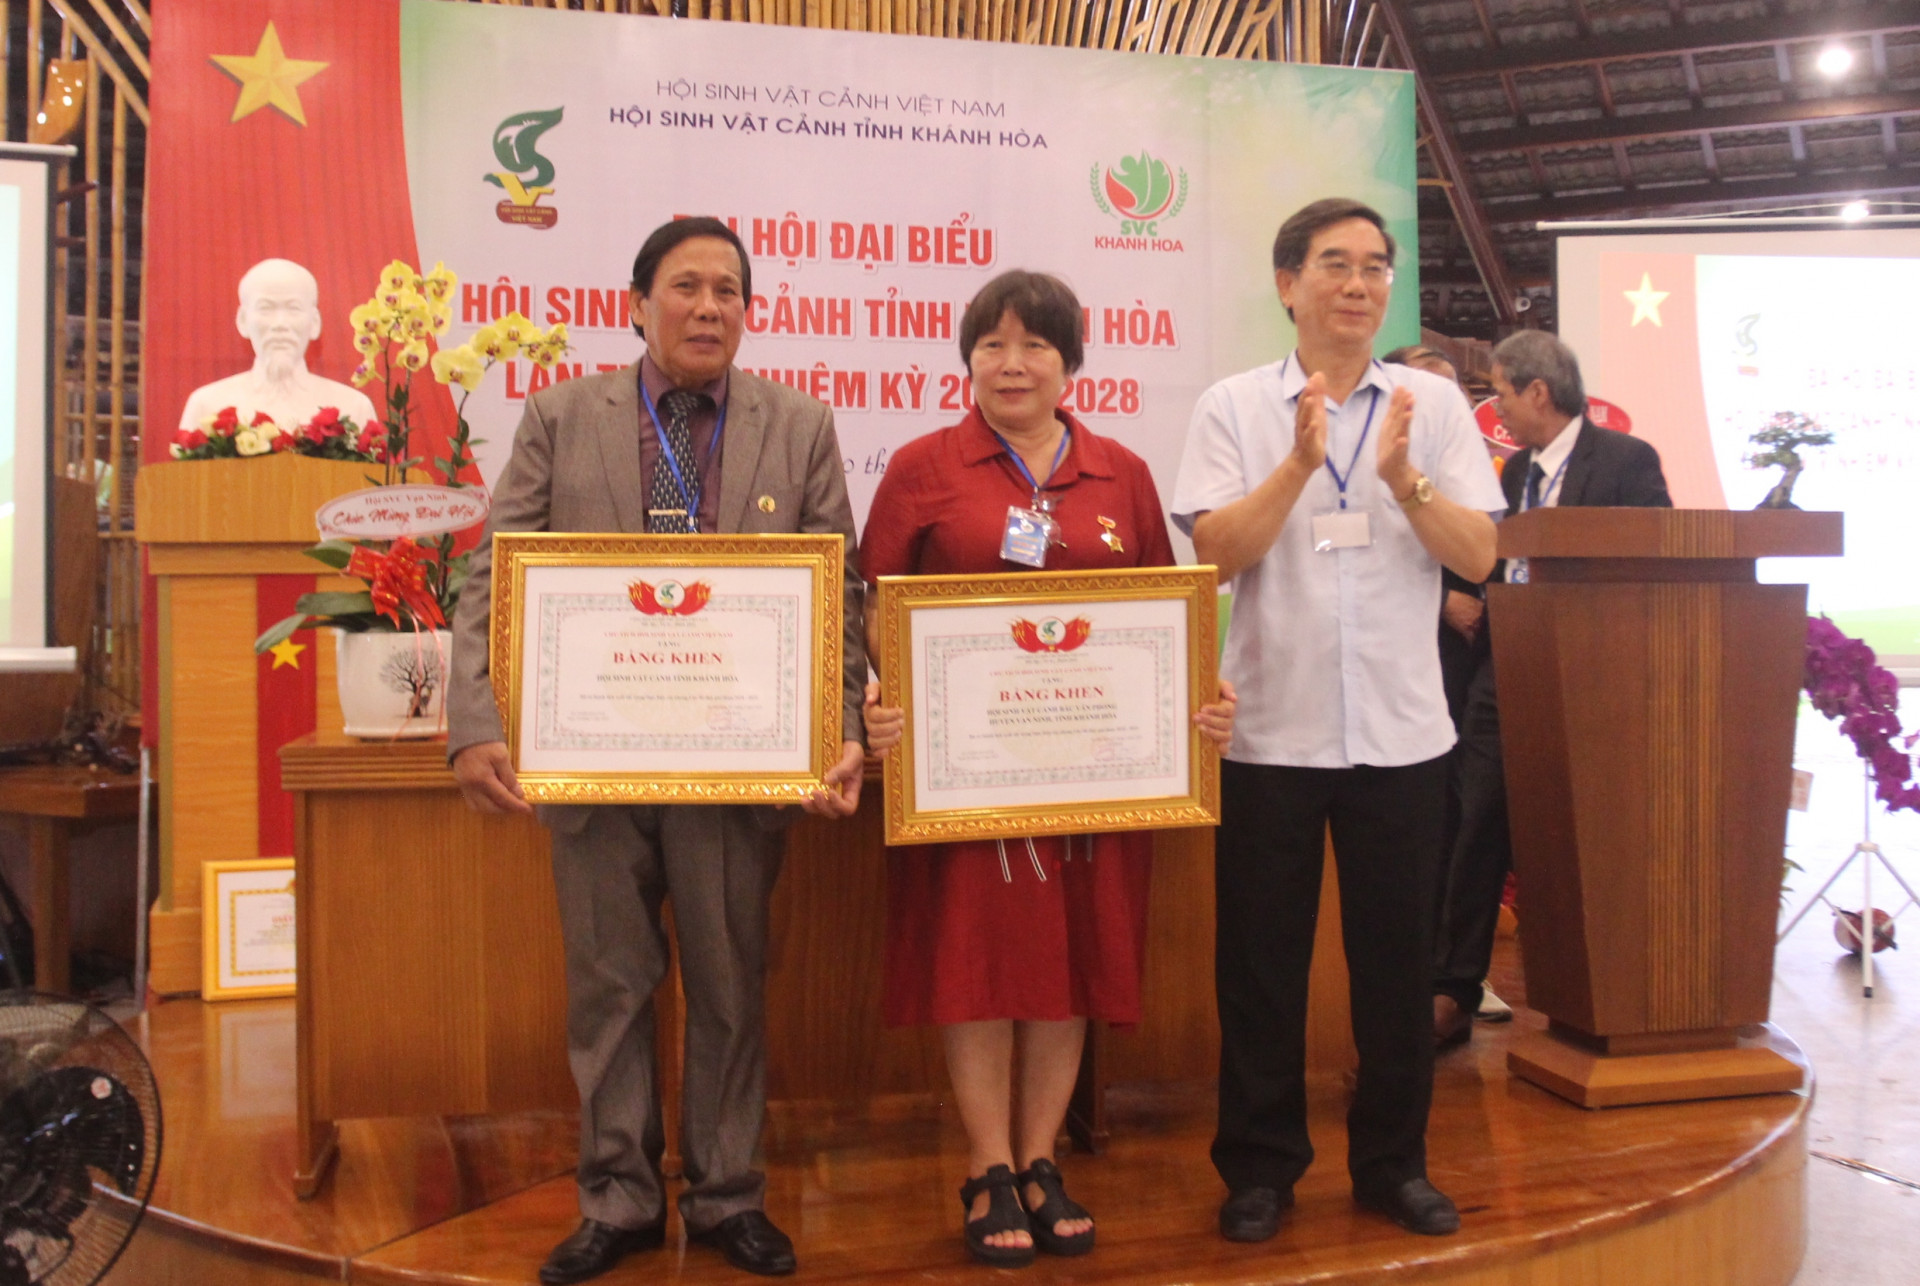 Các tập thể nhận bằng khen của Hội Sinh vật cảnh Việt Nam.